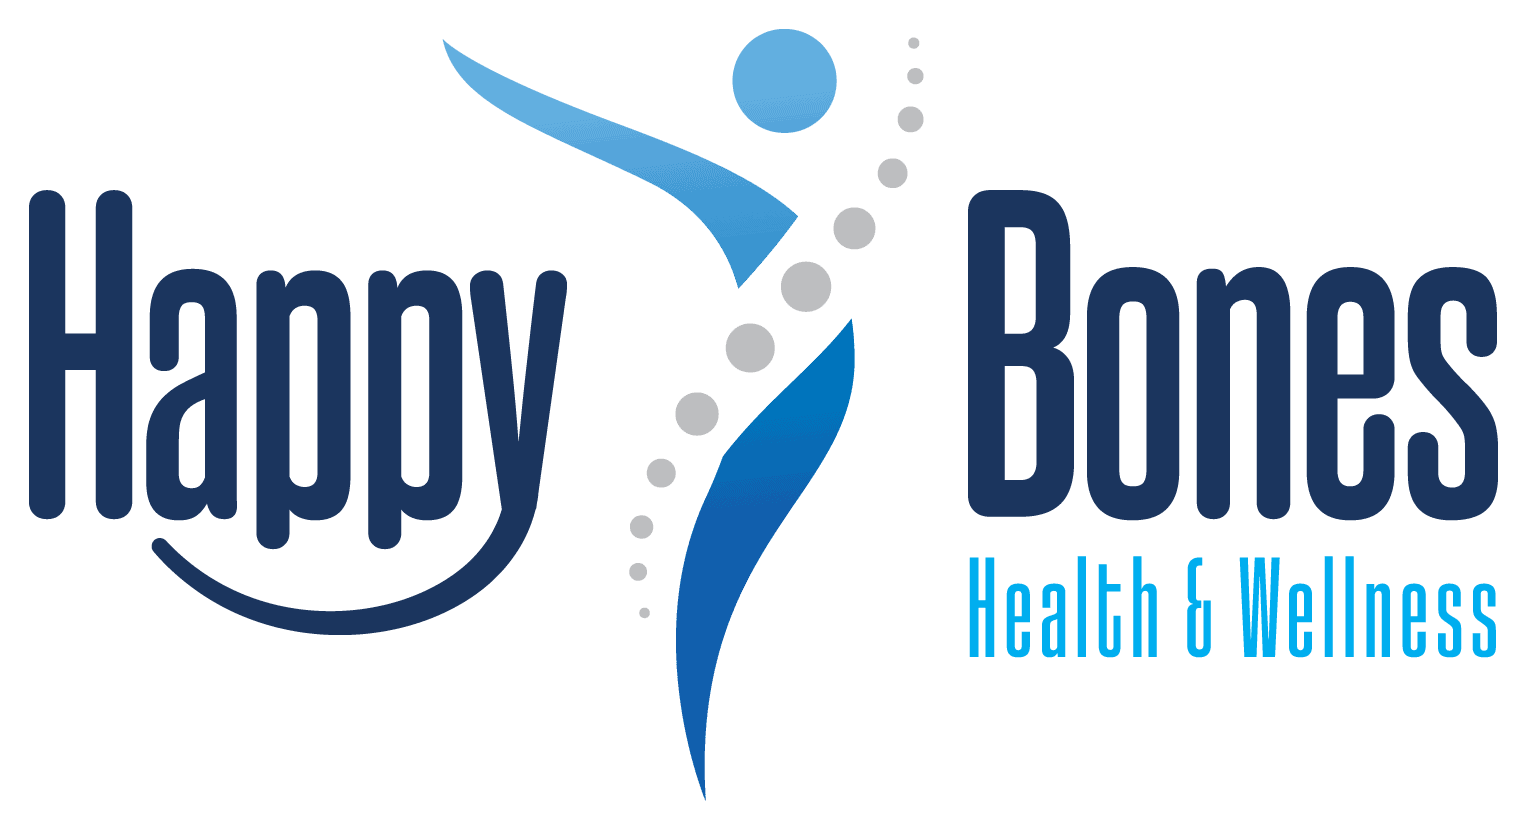 Happy bones logo